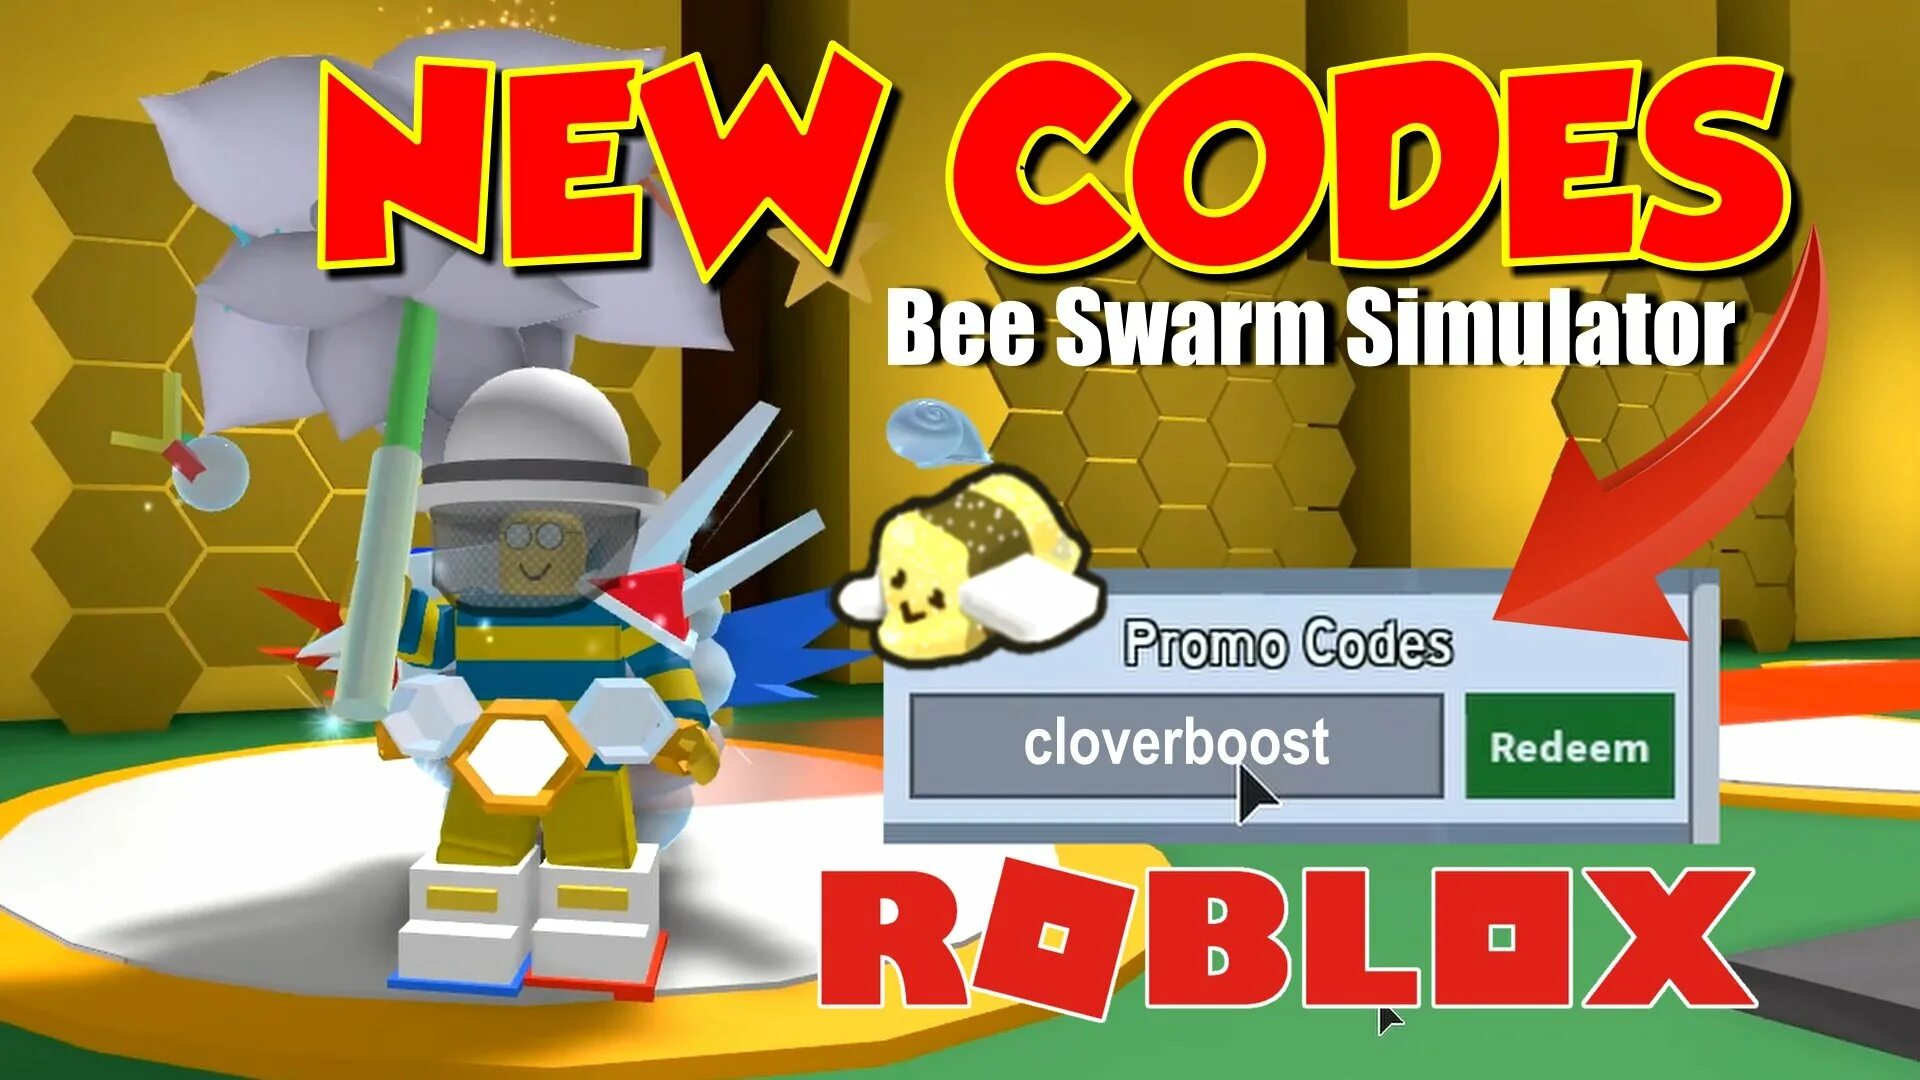 Bee Swarm Simulator codes. РОБЛОКС Bee Swarm Simulator. РОБЛОКС промокоды Bee Swarm Simulator. Roblox Bee Swarm Simulator codes. New coding simulator codes